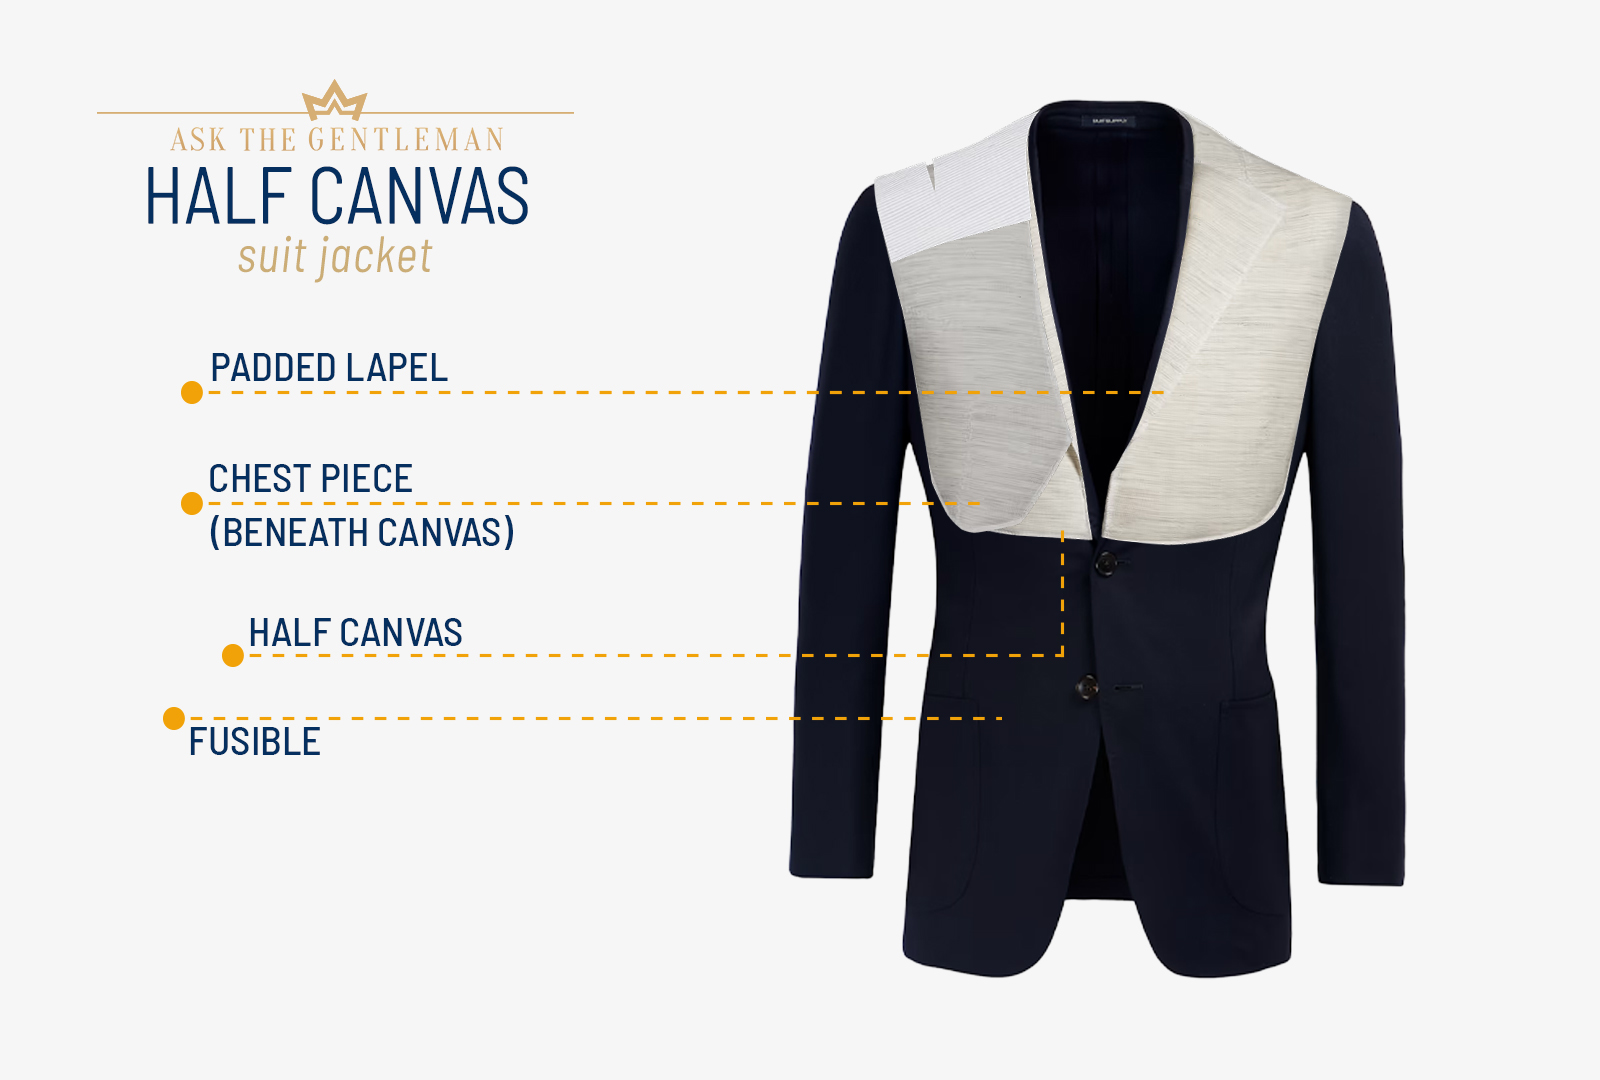 What is a half-canvas suit jacket